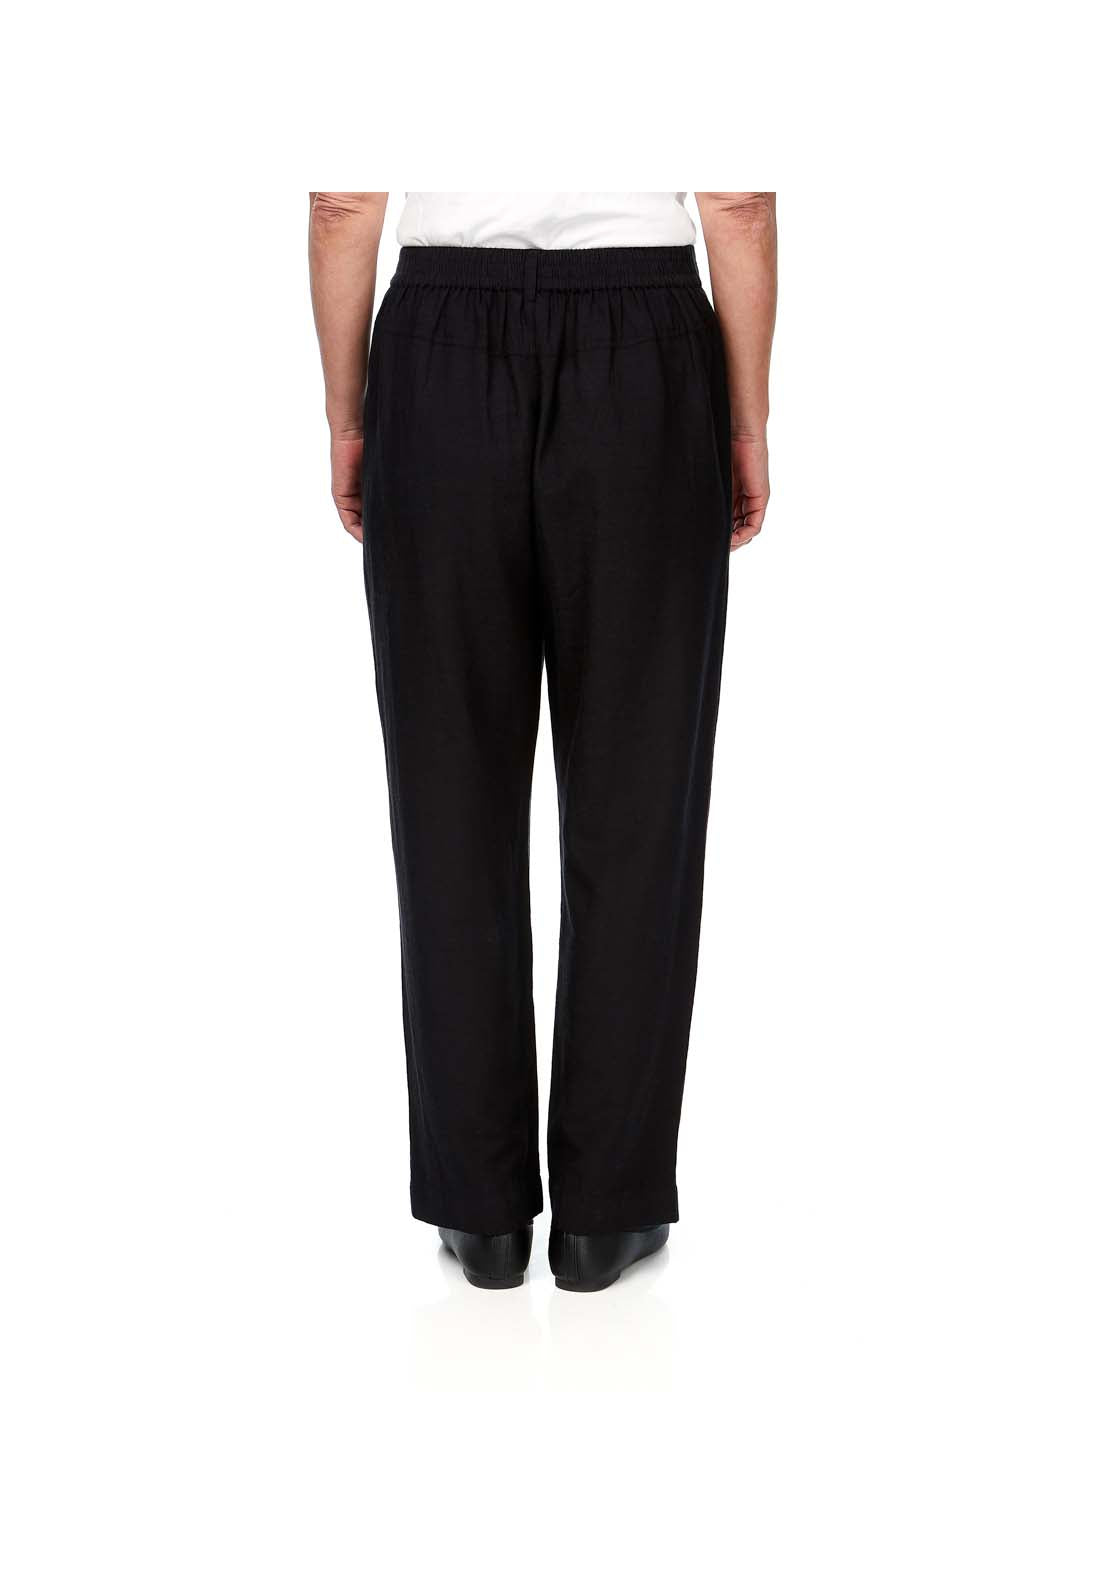 Tigiwear Linen Blend Black Trousers 2 Shaws Department Stores